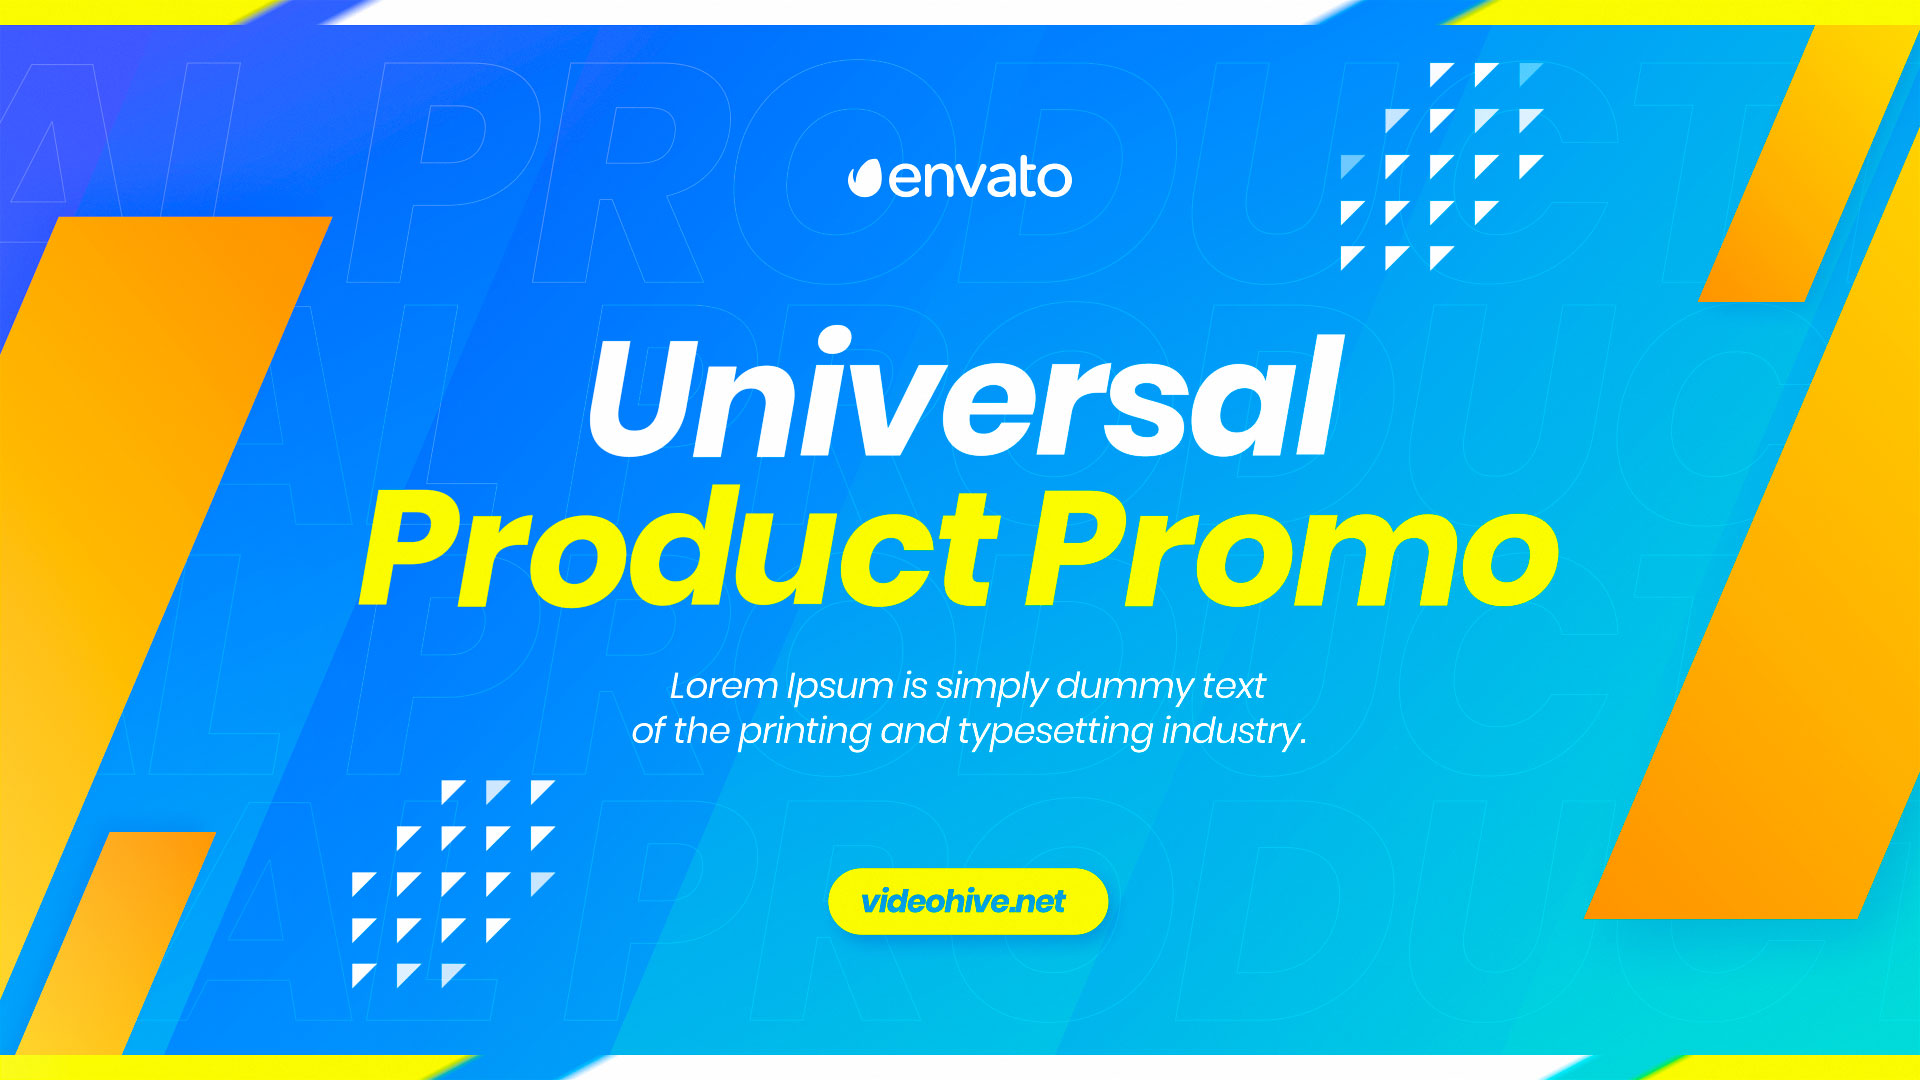 Universal Product Promo